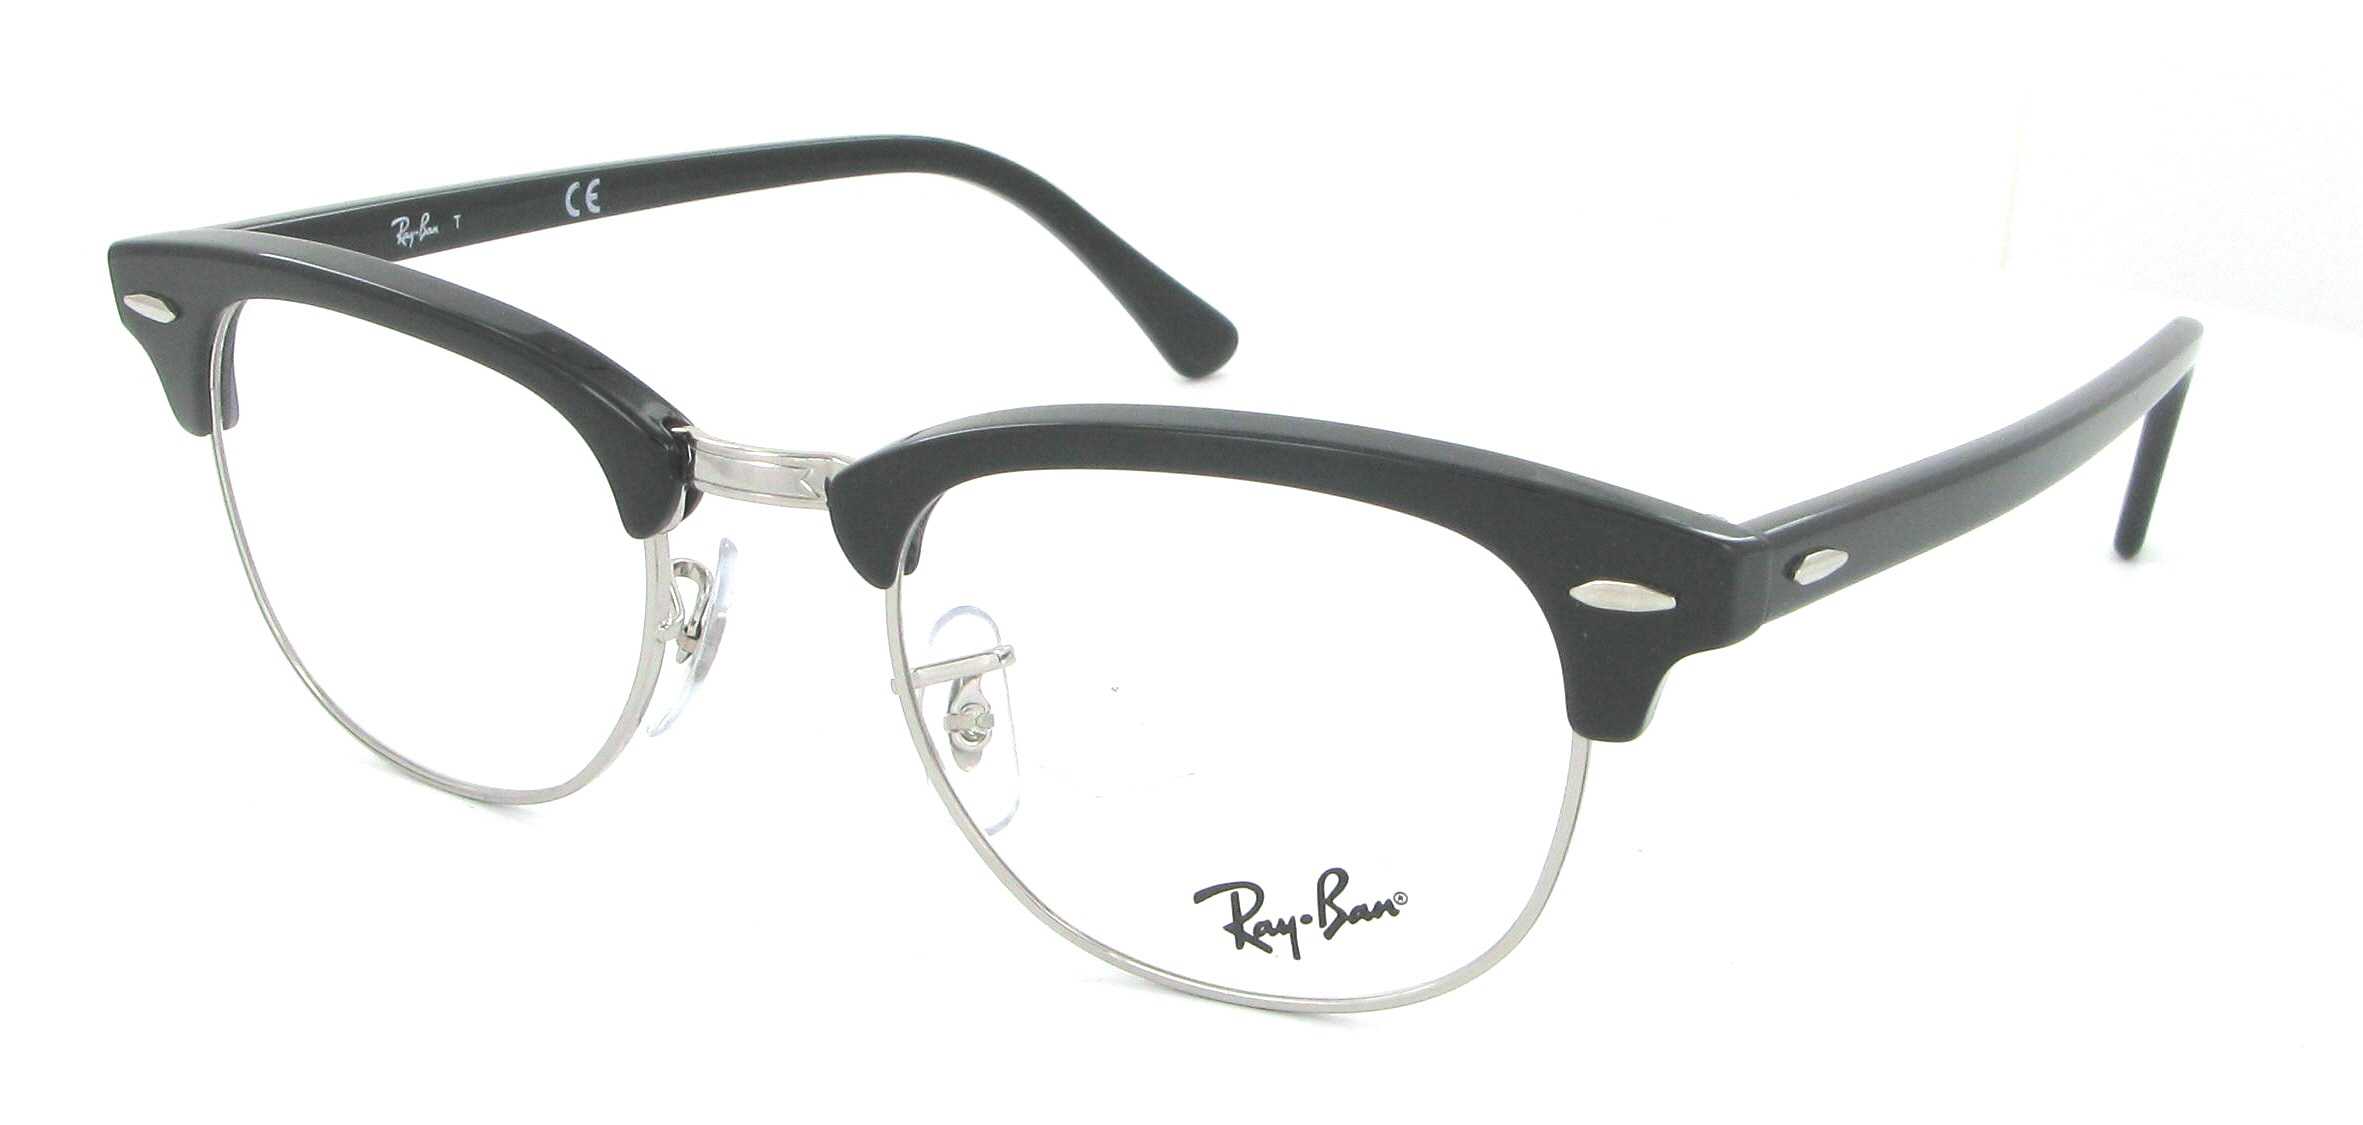 Ray Ban Rx 5154 00 Clubmaster 51 21 Eyeglasses Optical Center